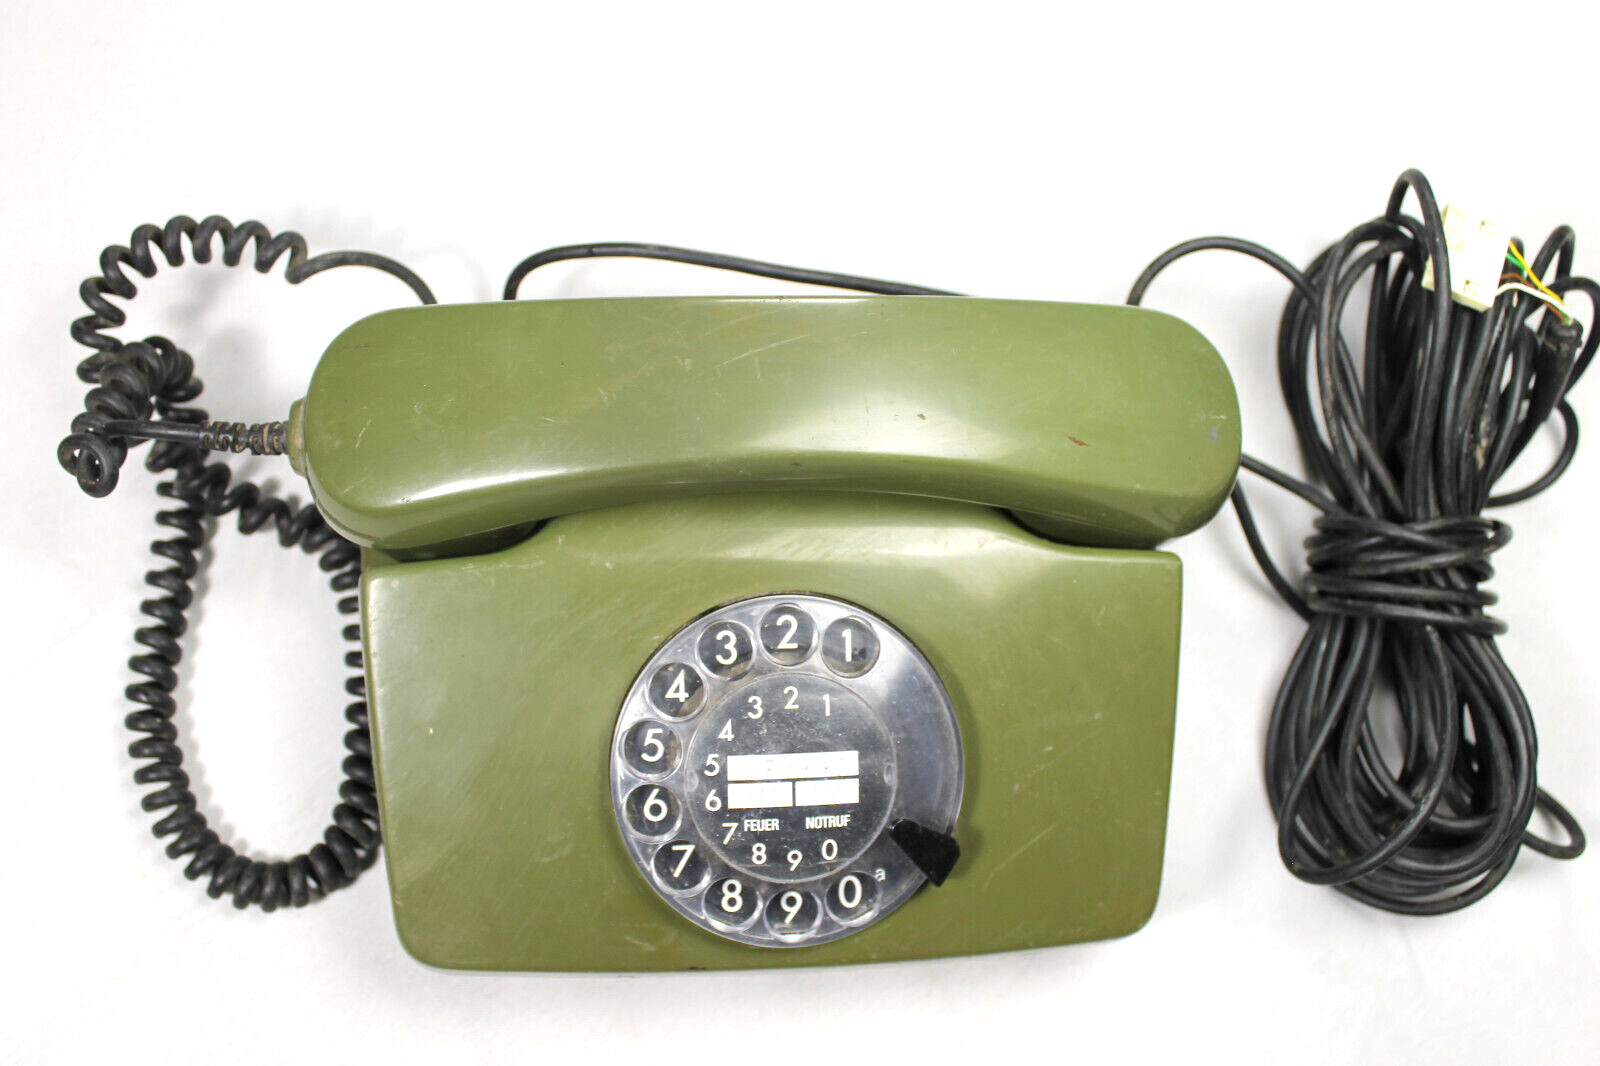 Siemens Vintage Rotary Phone 1980s Green Retro Desk Telephone FetAp 791-1